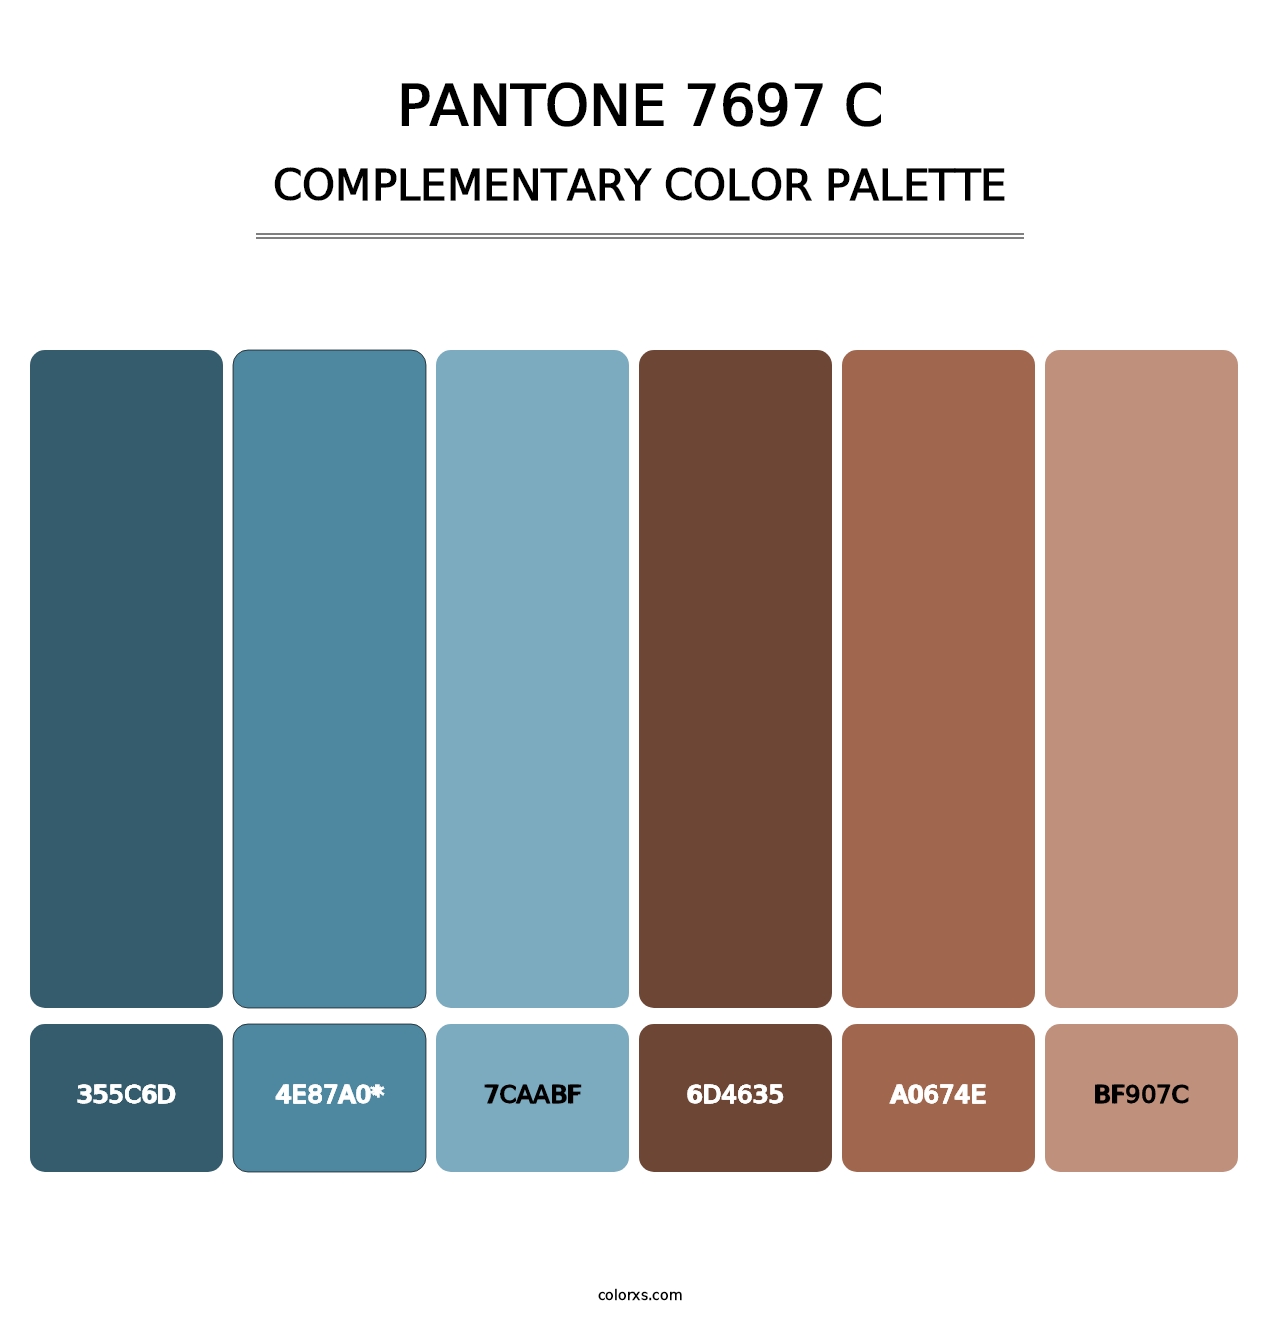 PANTONE 7697 C - Complementary Color Palette